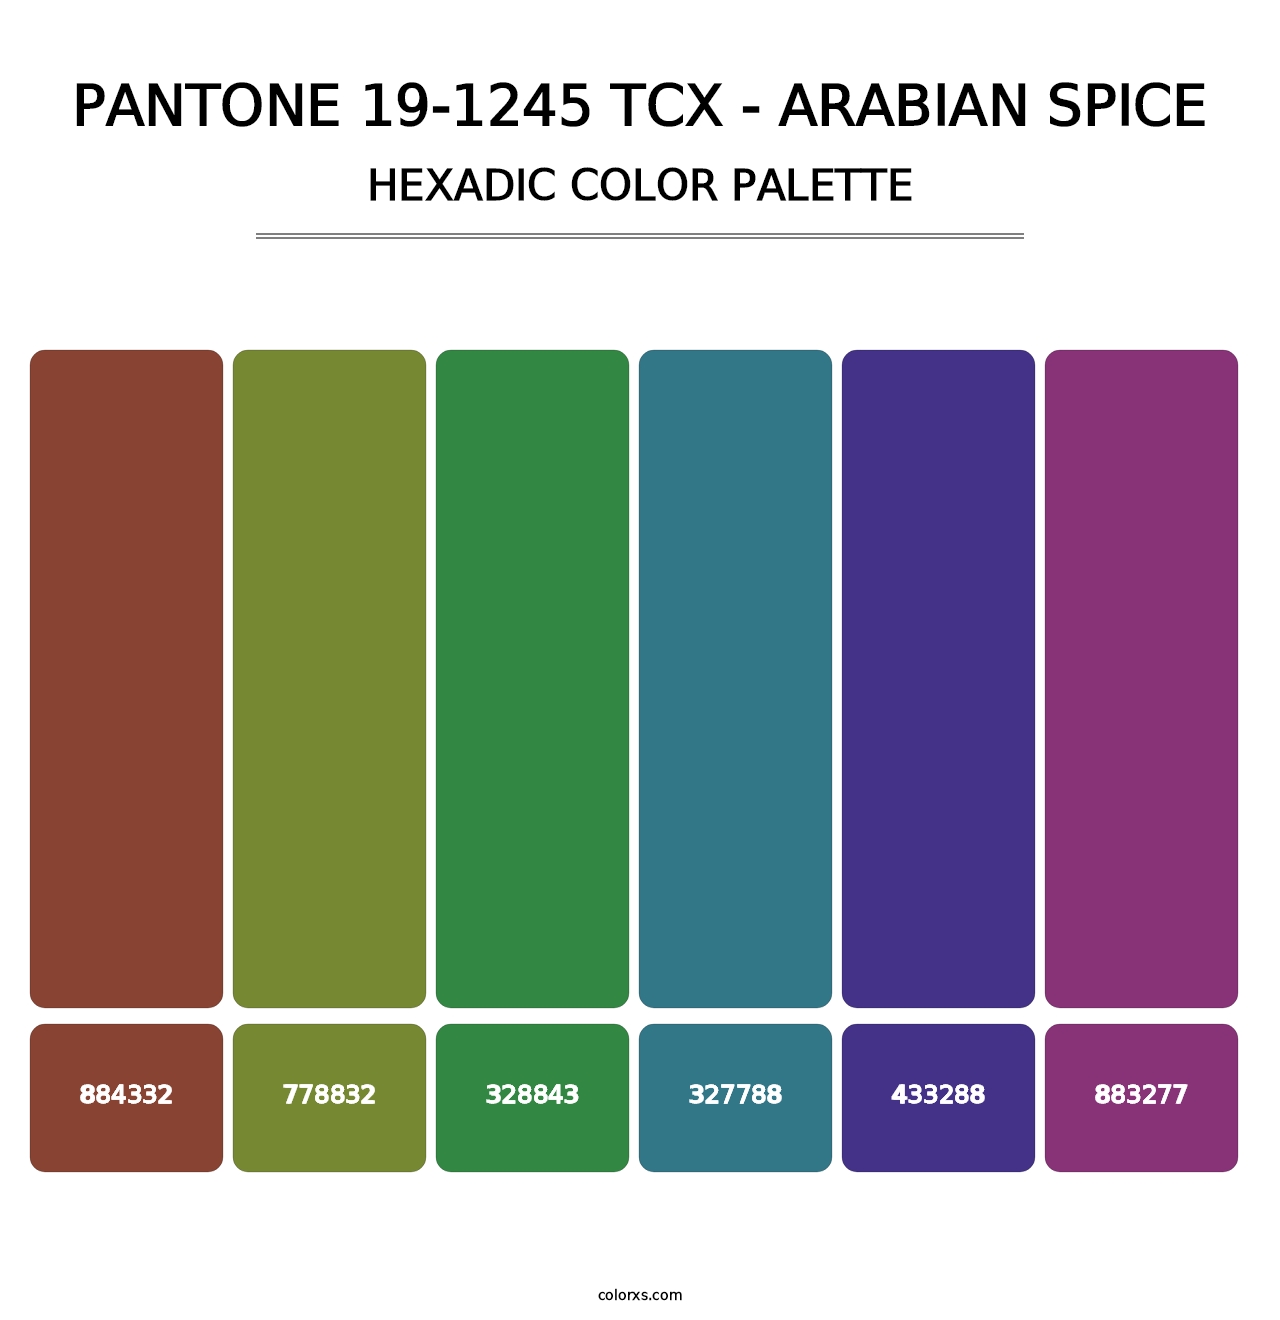 PANTONE 19-1245 TCX - Arabian Spice - Hexadic Color Palette